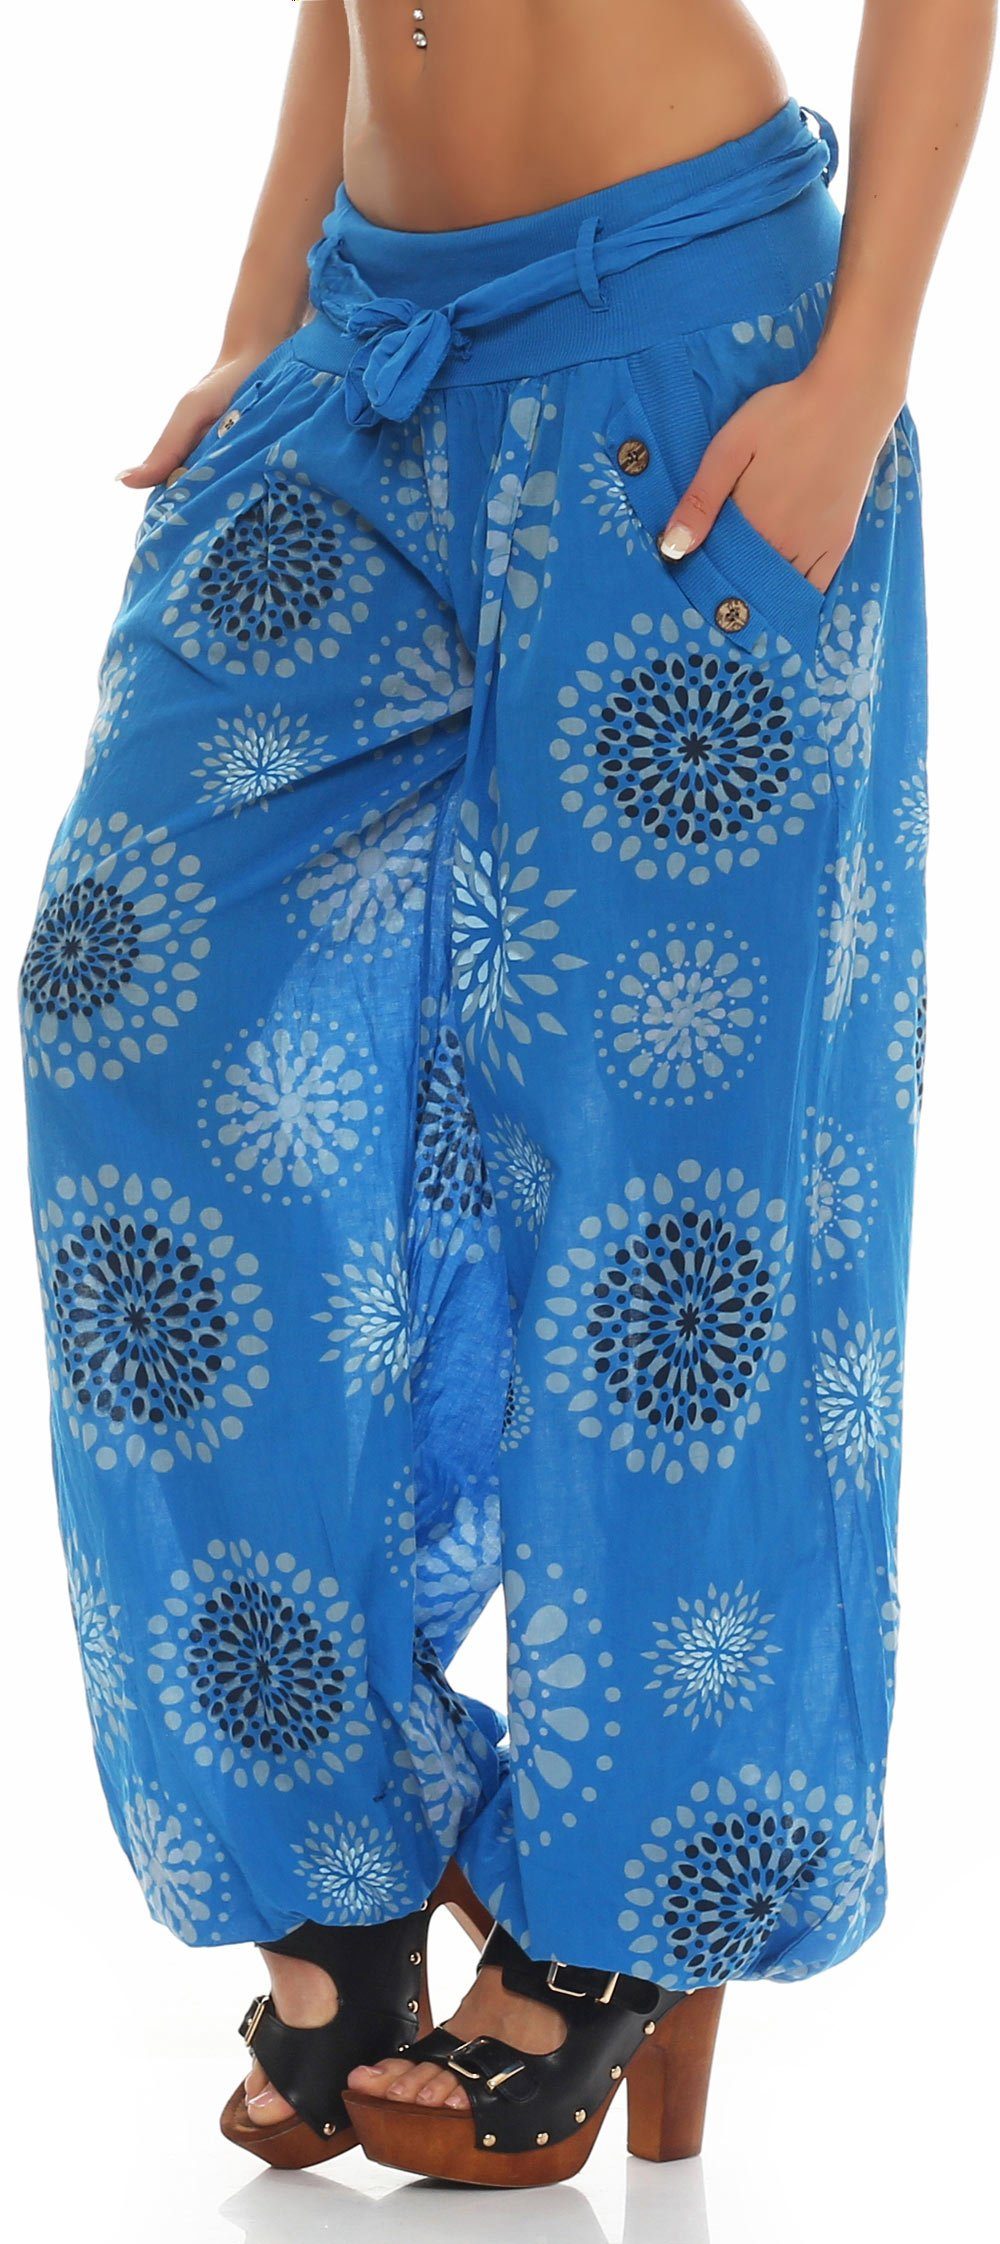 malito more than fashion 3481 Aladinhose mit Haremshose Print blau Einheitsgröße Pumphose